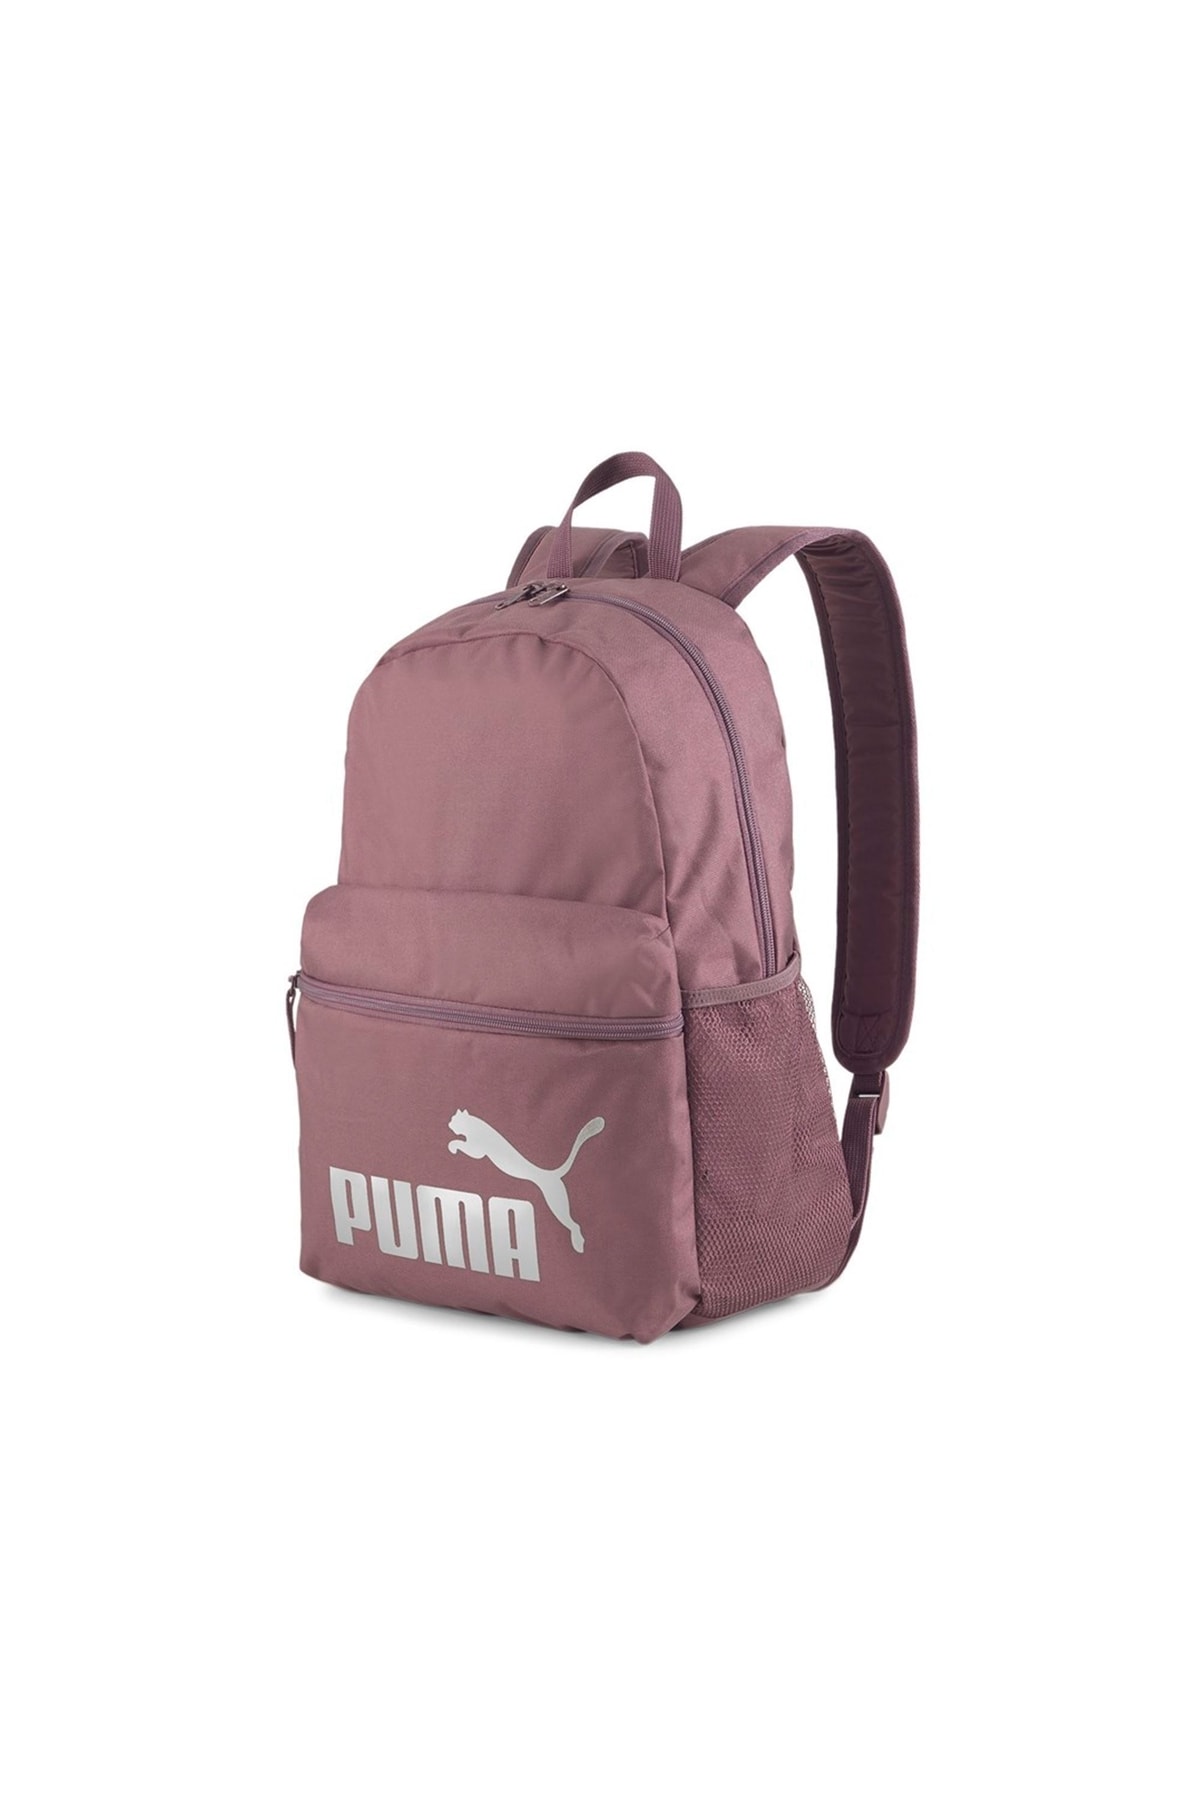 Puma Phase Backpack Günlük Sırt Çantası 7548741 Pembe